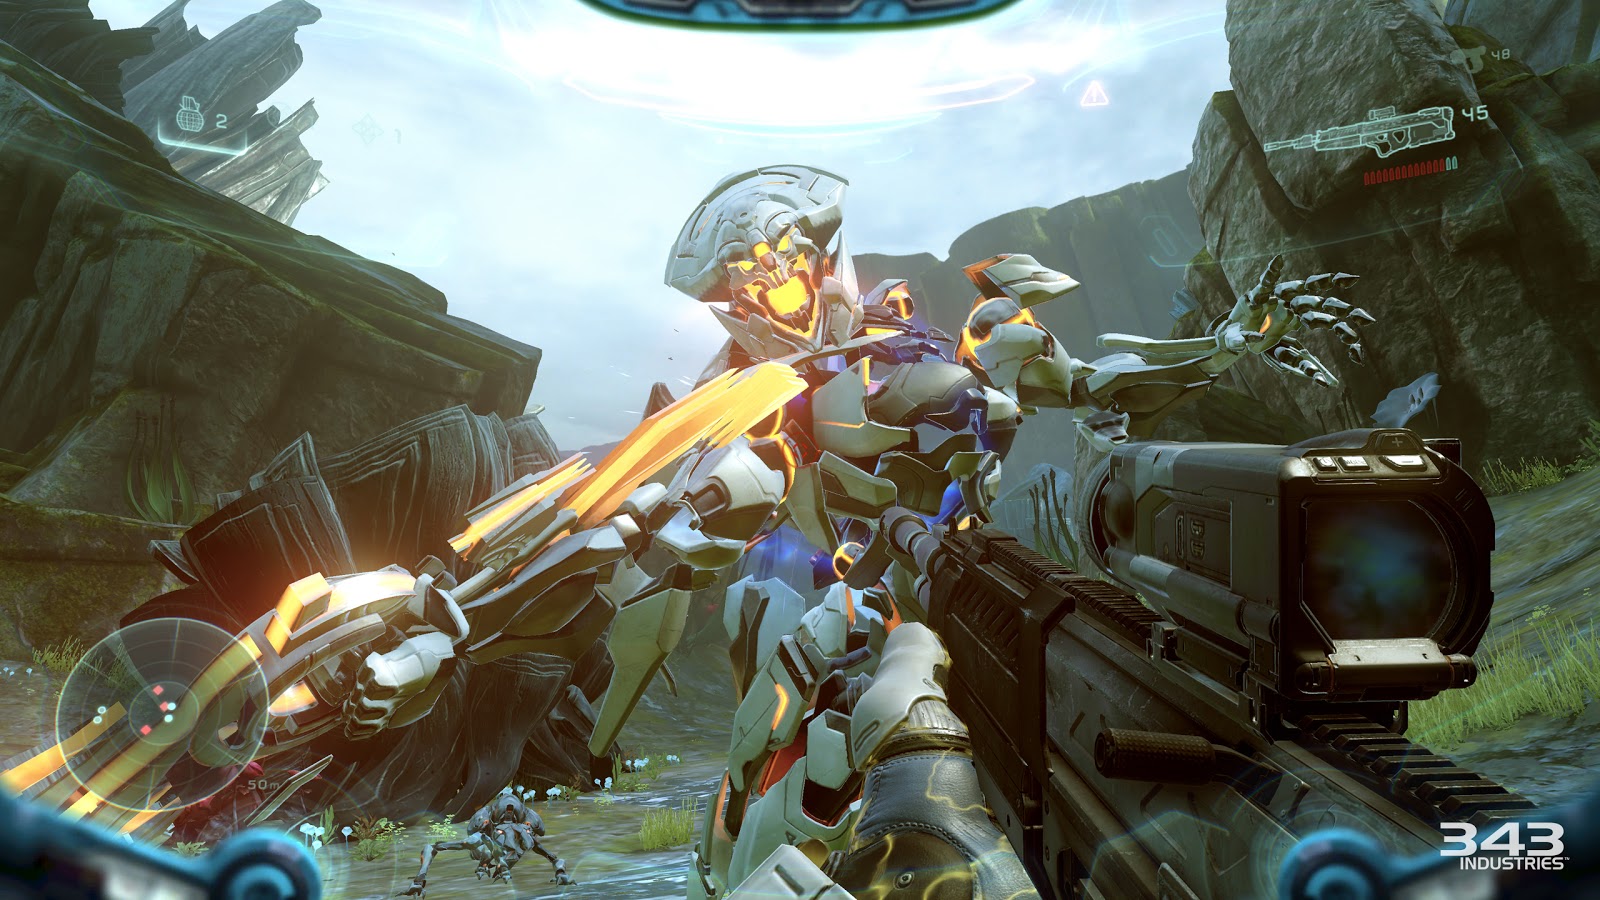 Halo 5: Guardians: The Kotaku Review